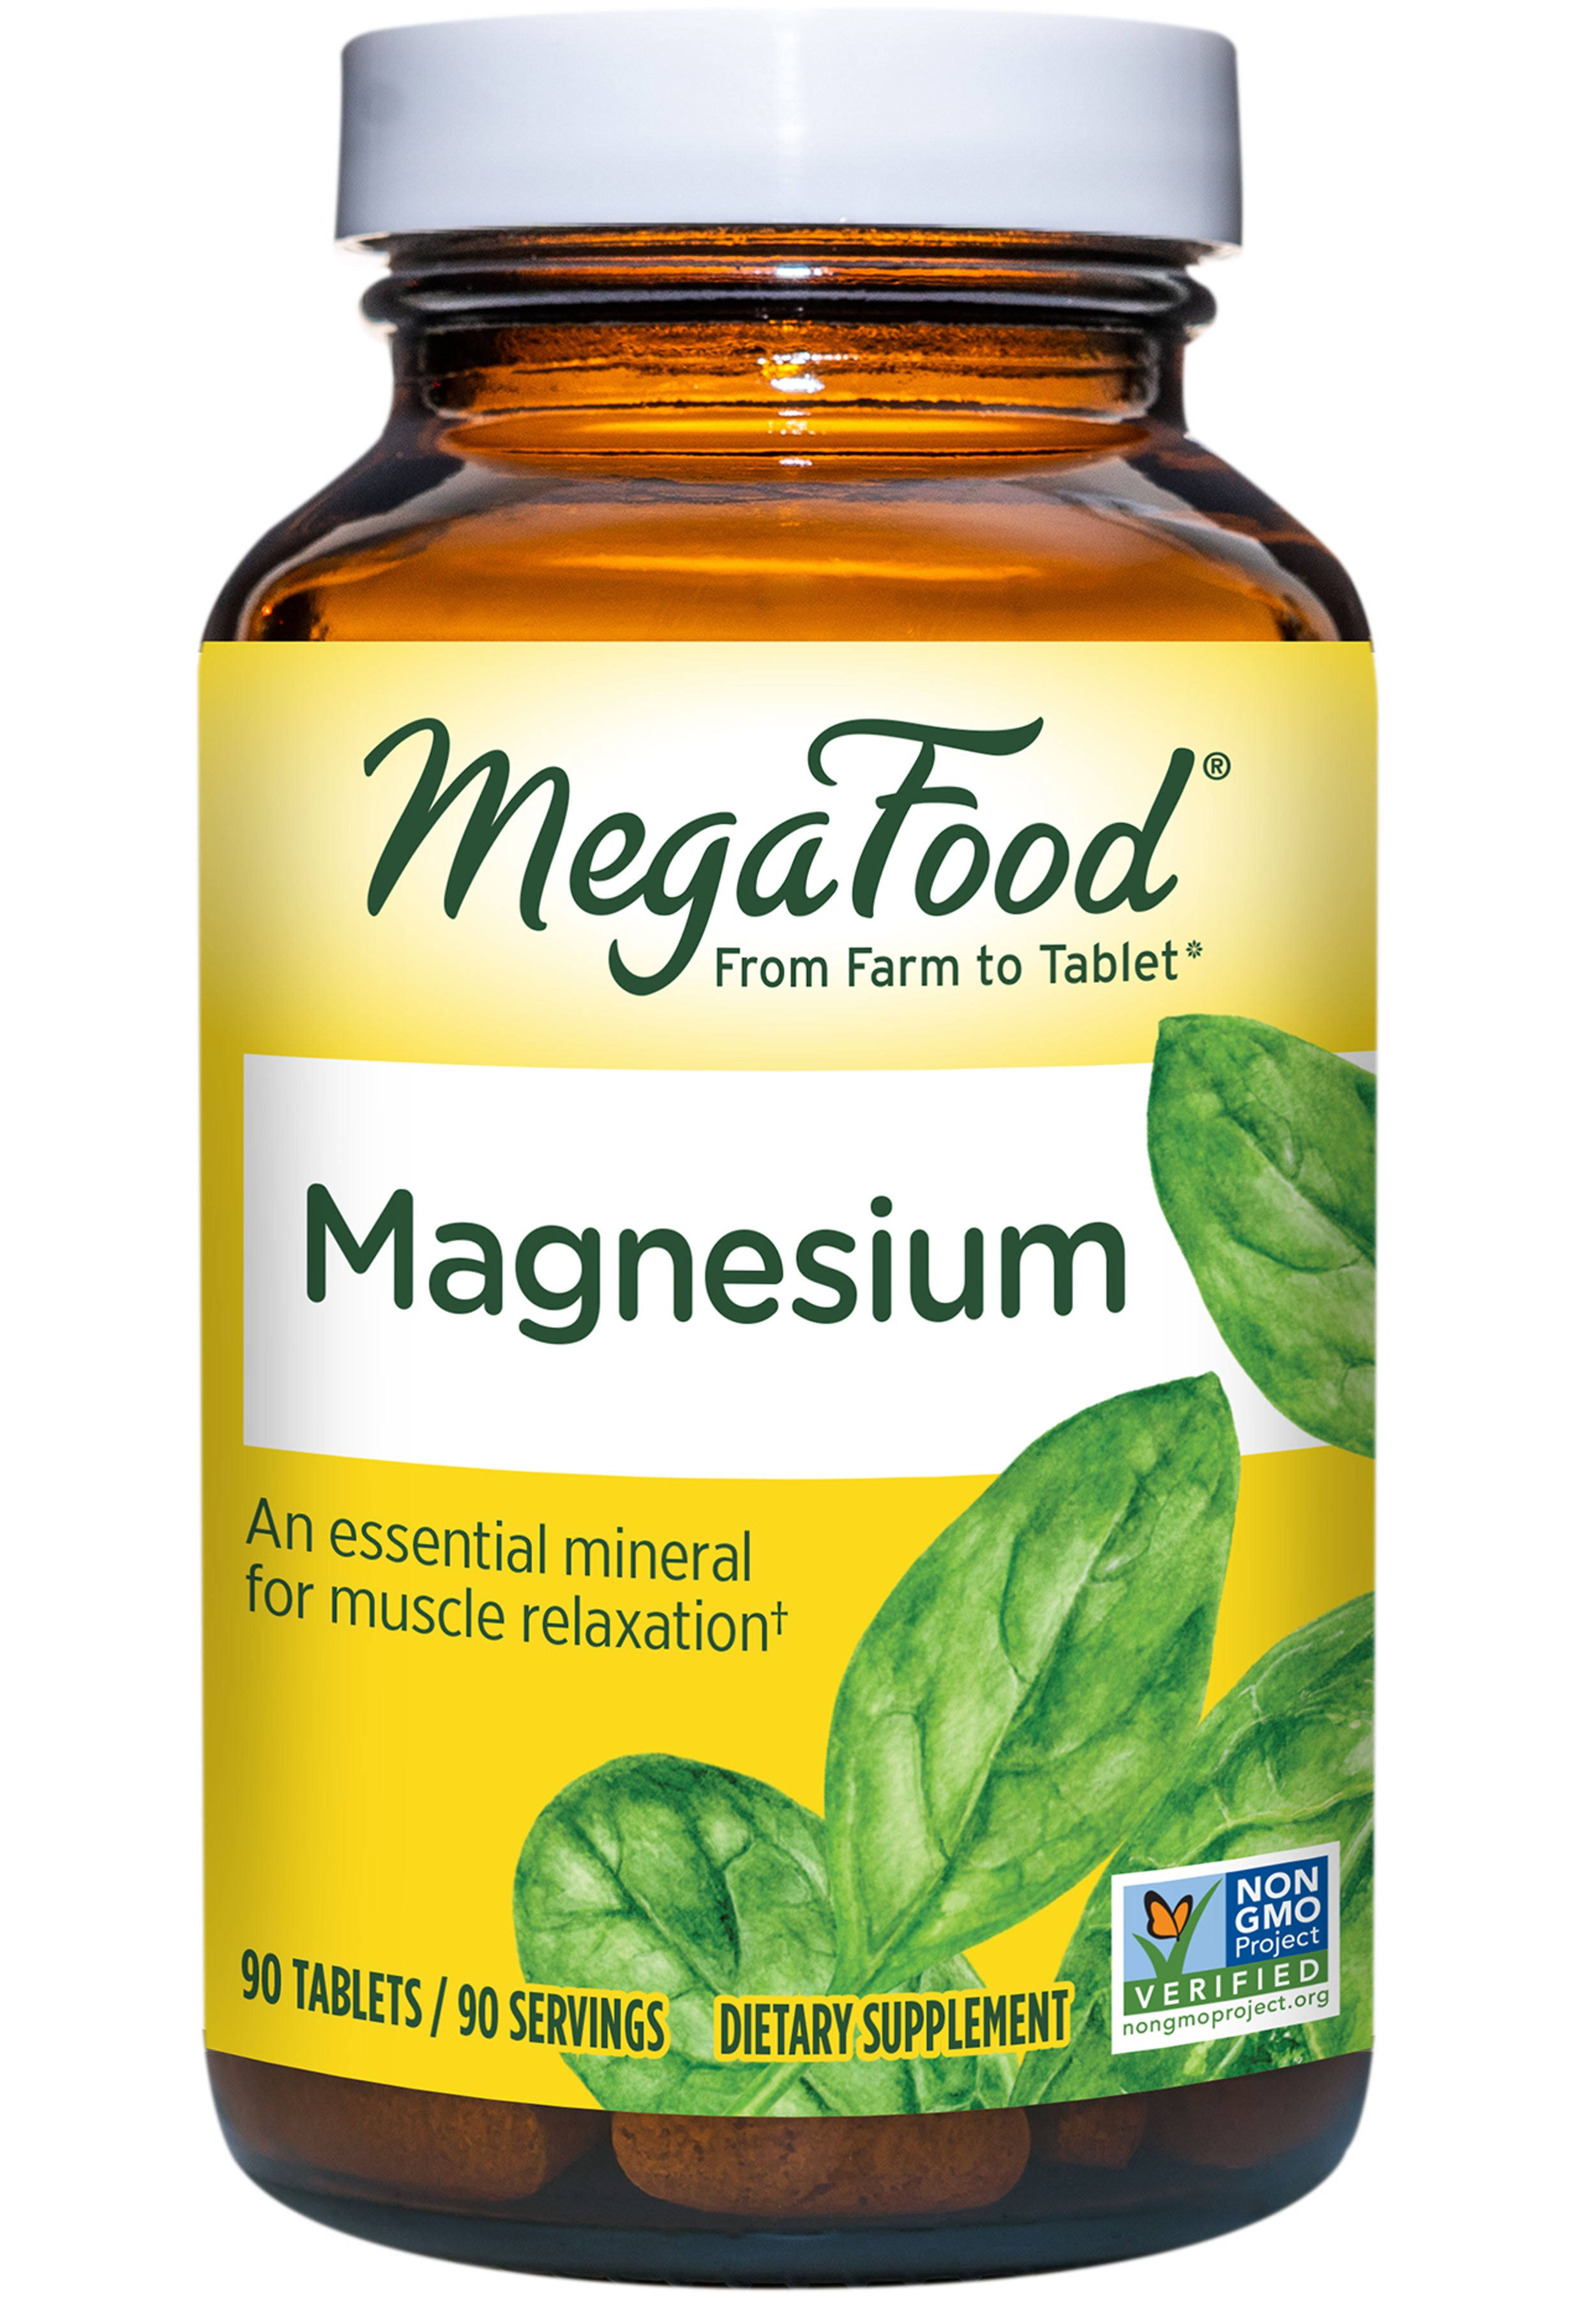 MegaFood Magnesium Supplement - 90 Tablets